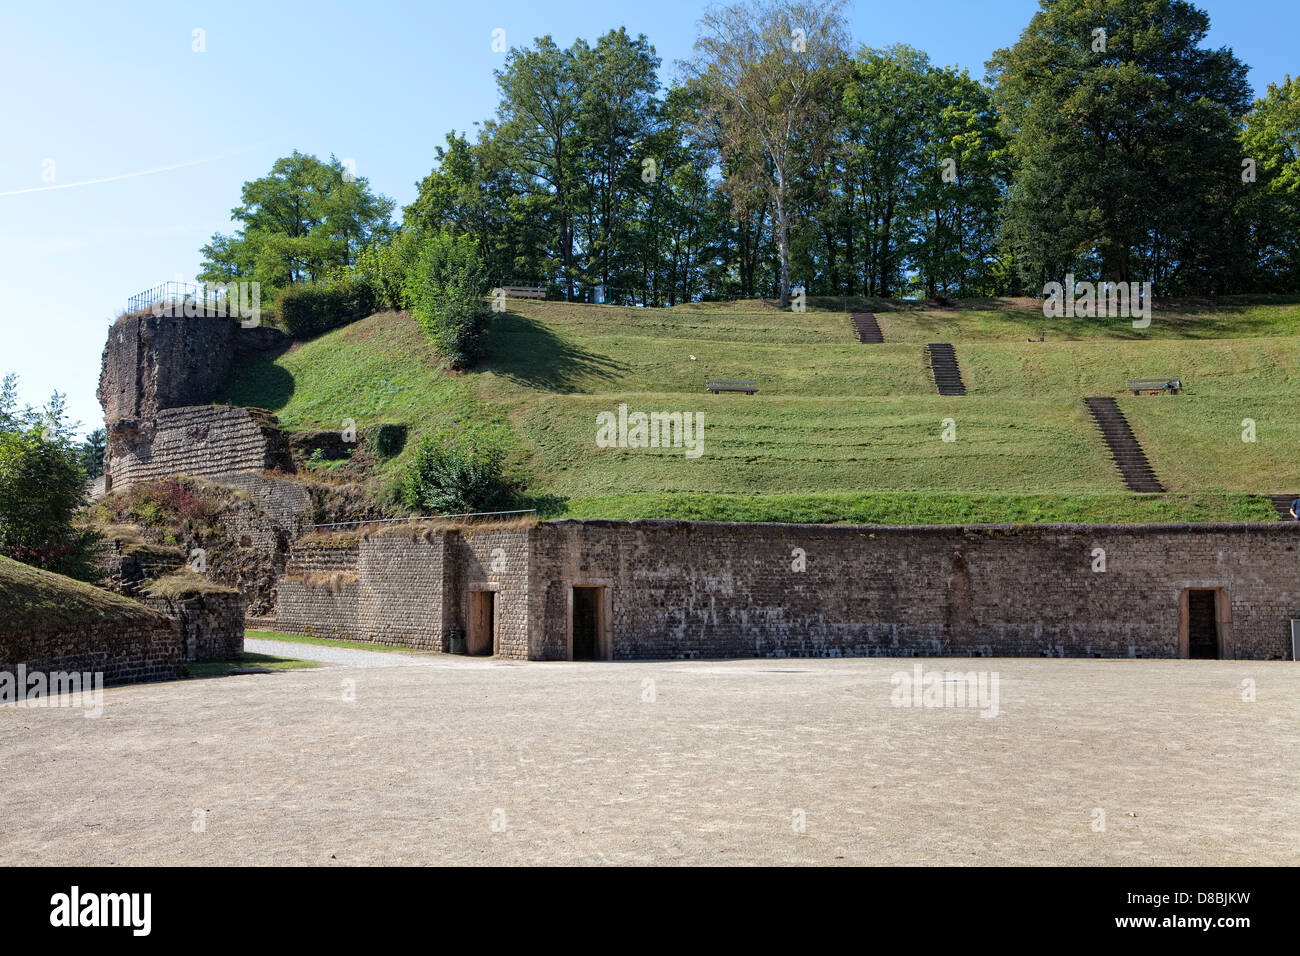 Amphitheater from the Roman Age, Trier, Rhineland-Palatinate, Germany, Europe Stock Photo